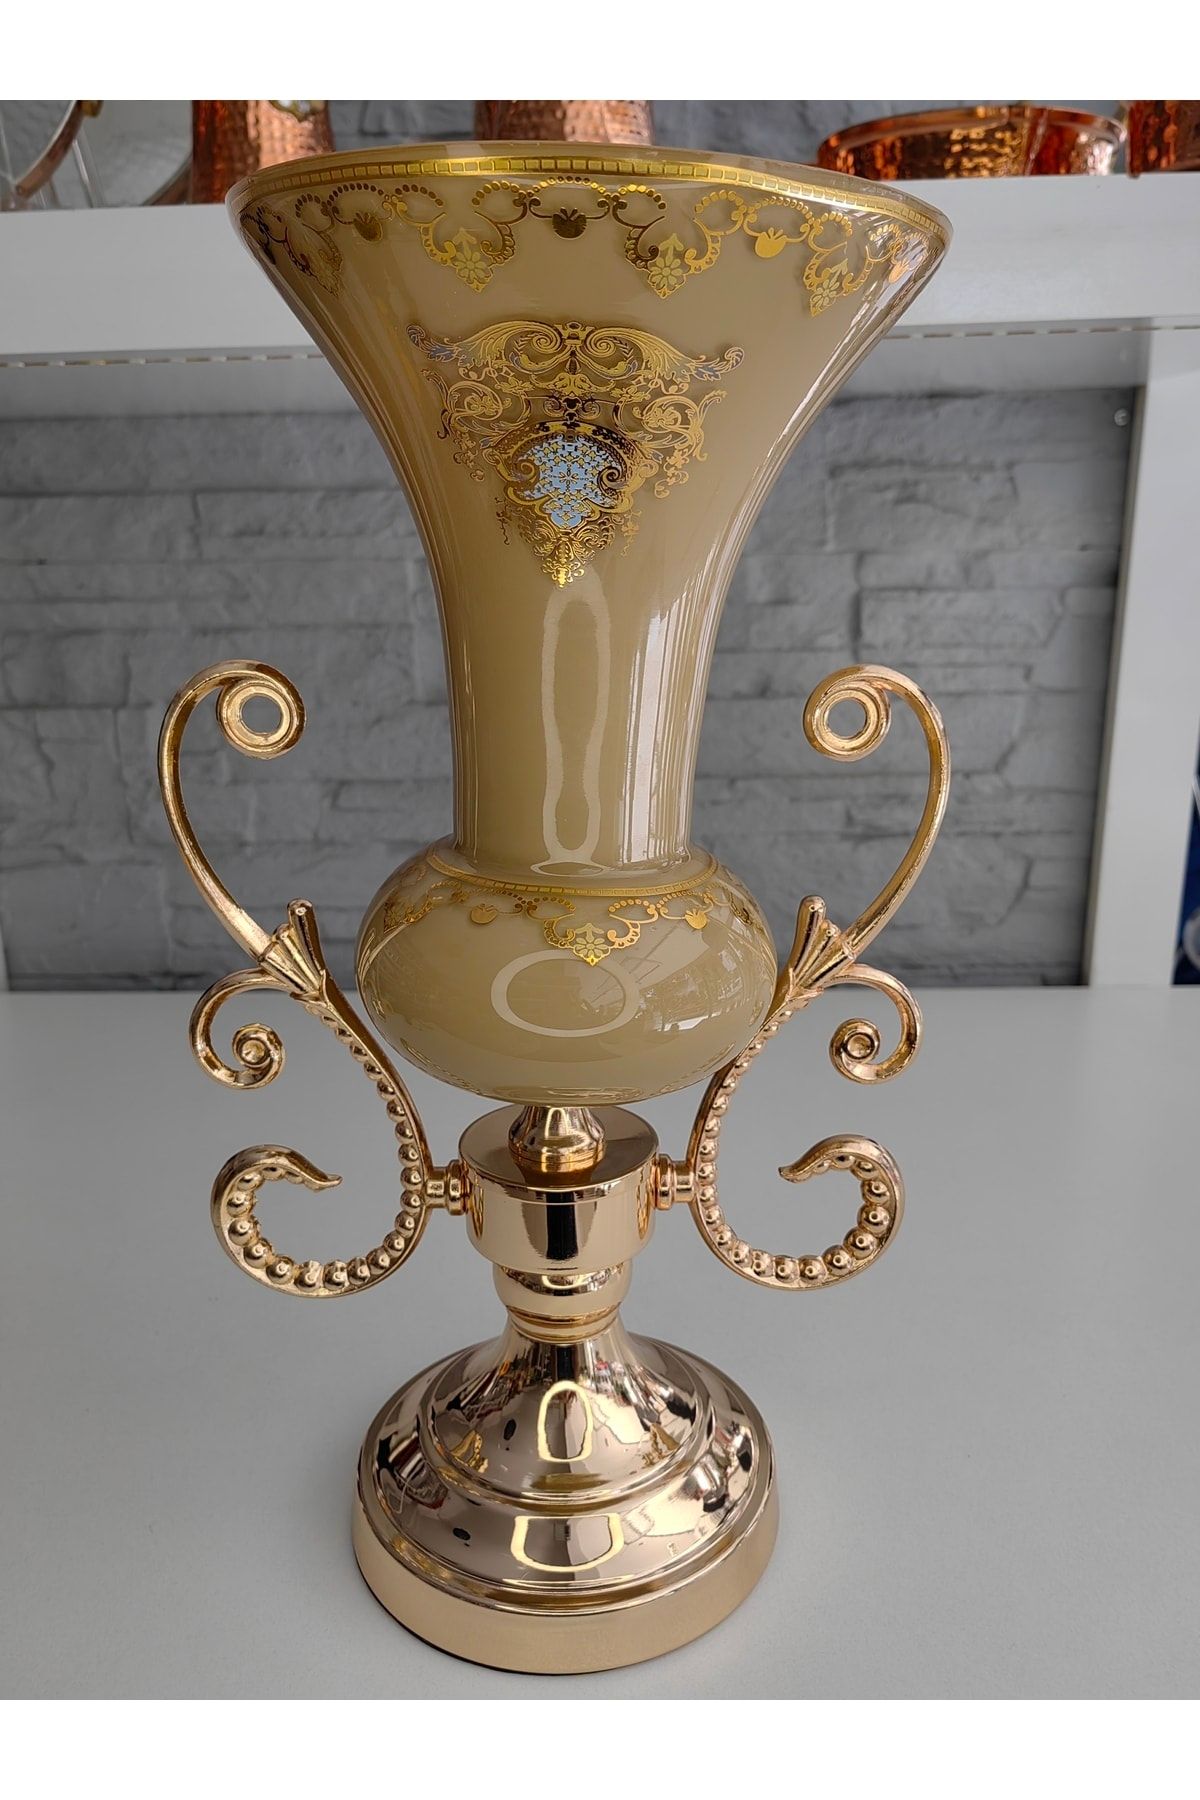 ALANYA HOME DECOR Lüks Orijinal Vazo Cam Gövde Altın Metal Ayak 40cm Luxury Original Vase Glass Body Gold Metal Foot